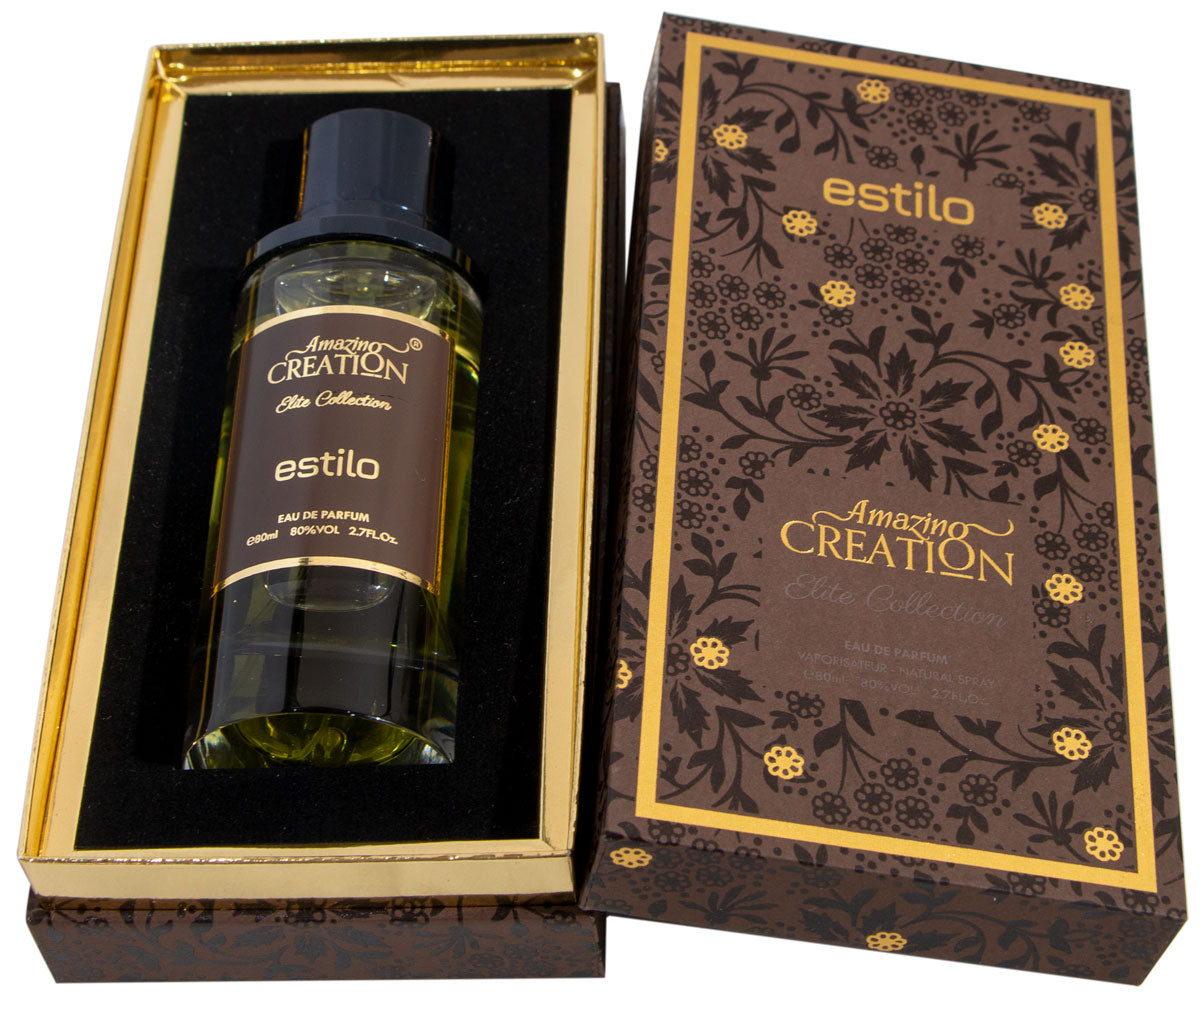 Estilo by Amazing Creation Elite Collection, Perfume for Men & Women EDP 80ml - samawa perfumes 